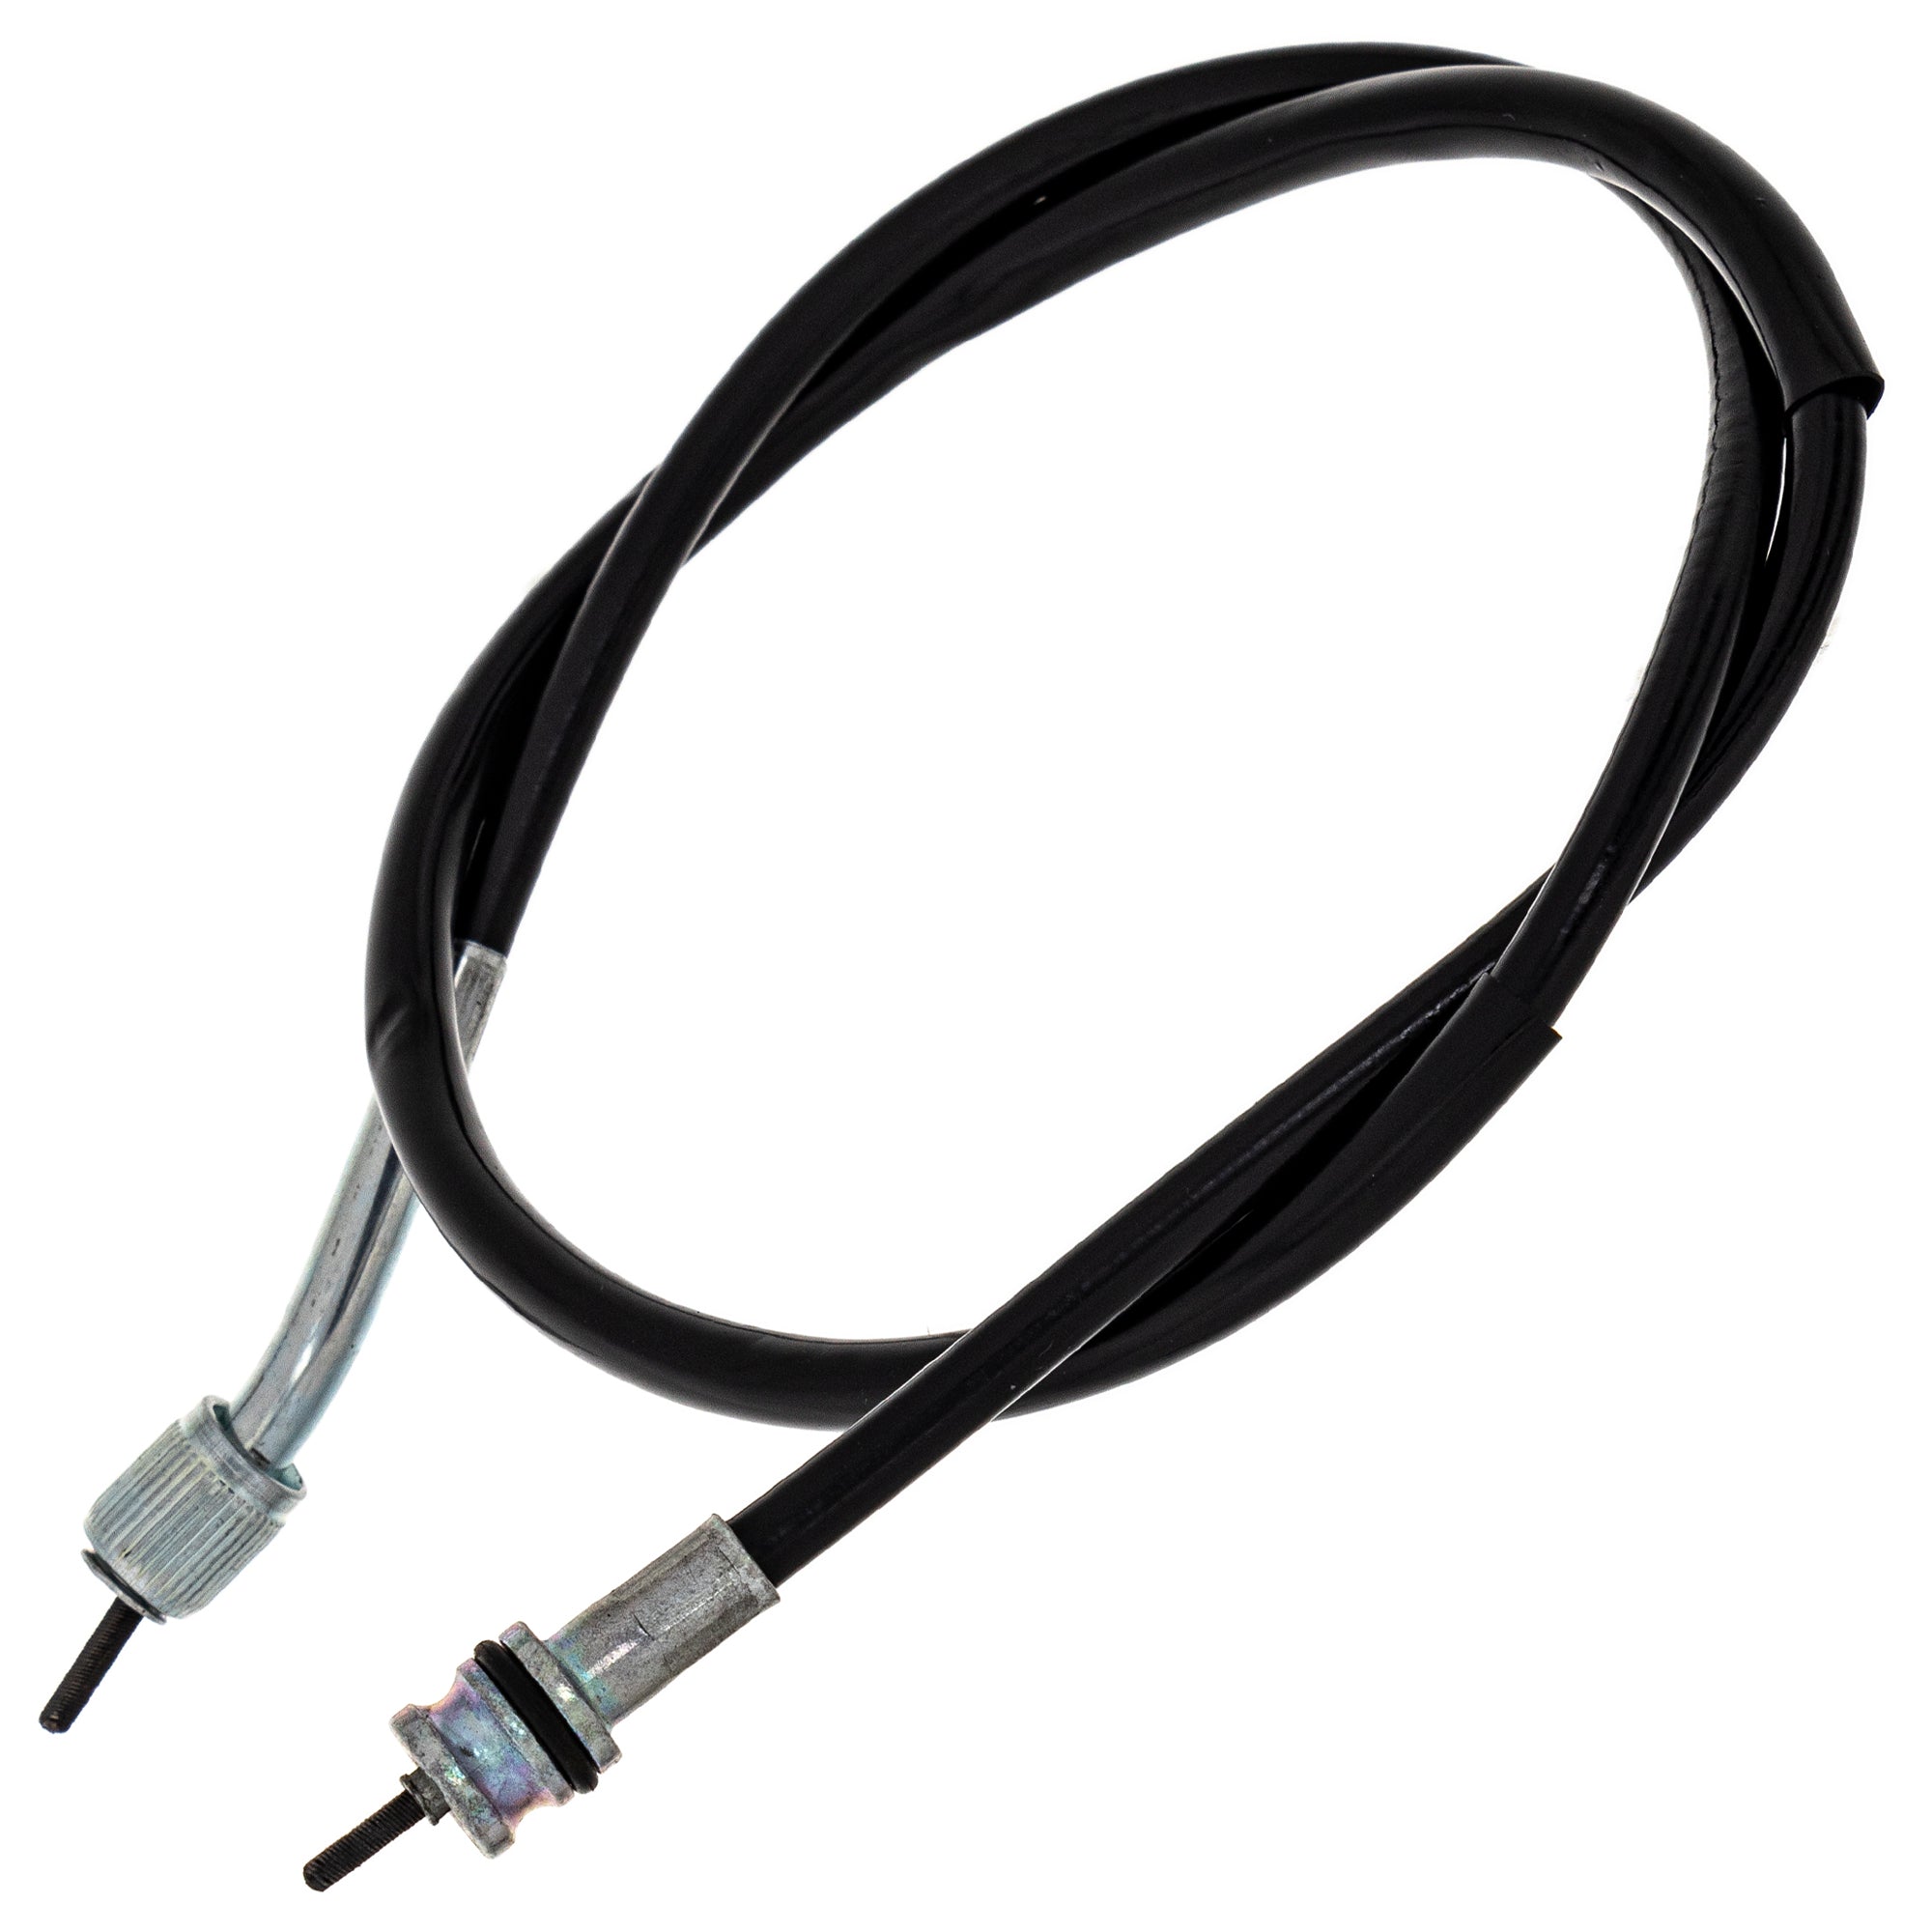 Speedometer Cable for Suzuki DR250 GSX1100F SP200 34910-38200